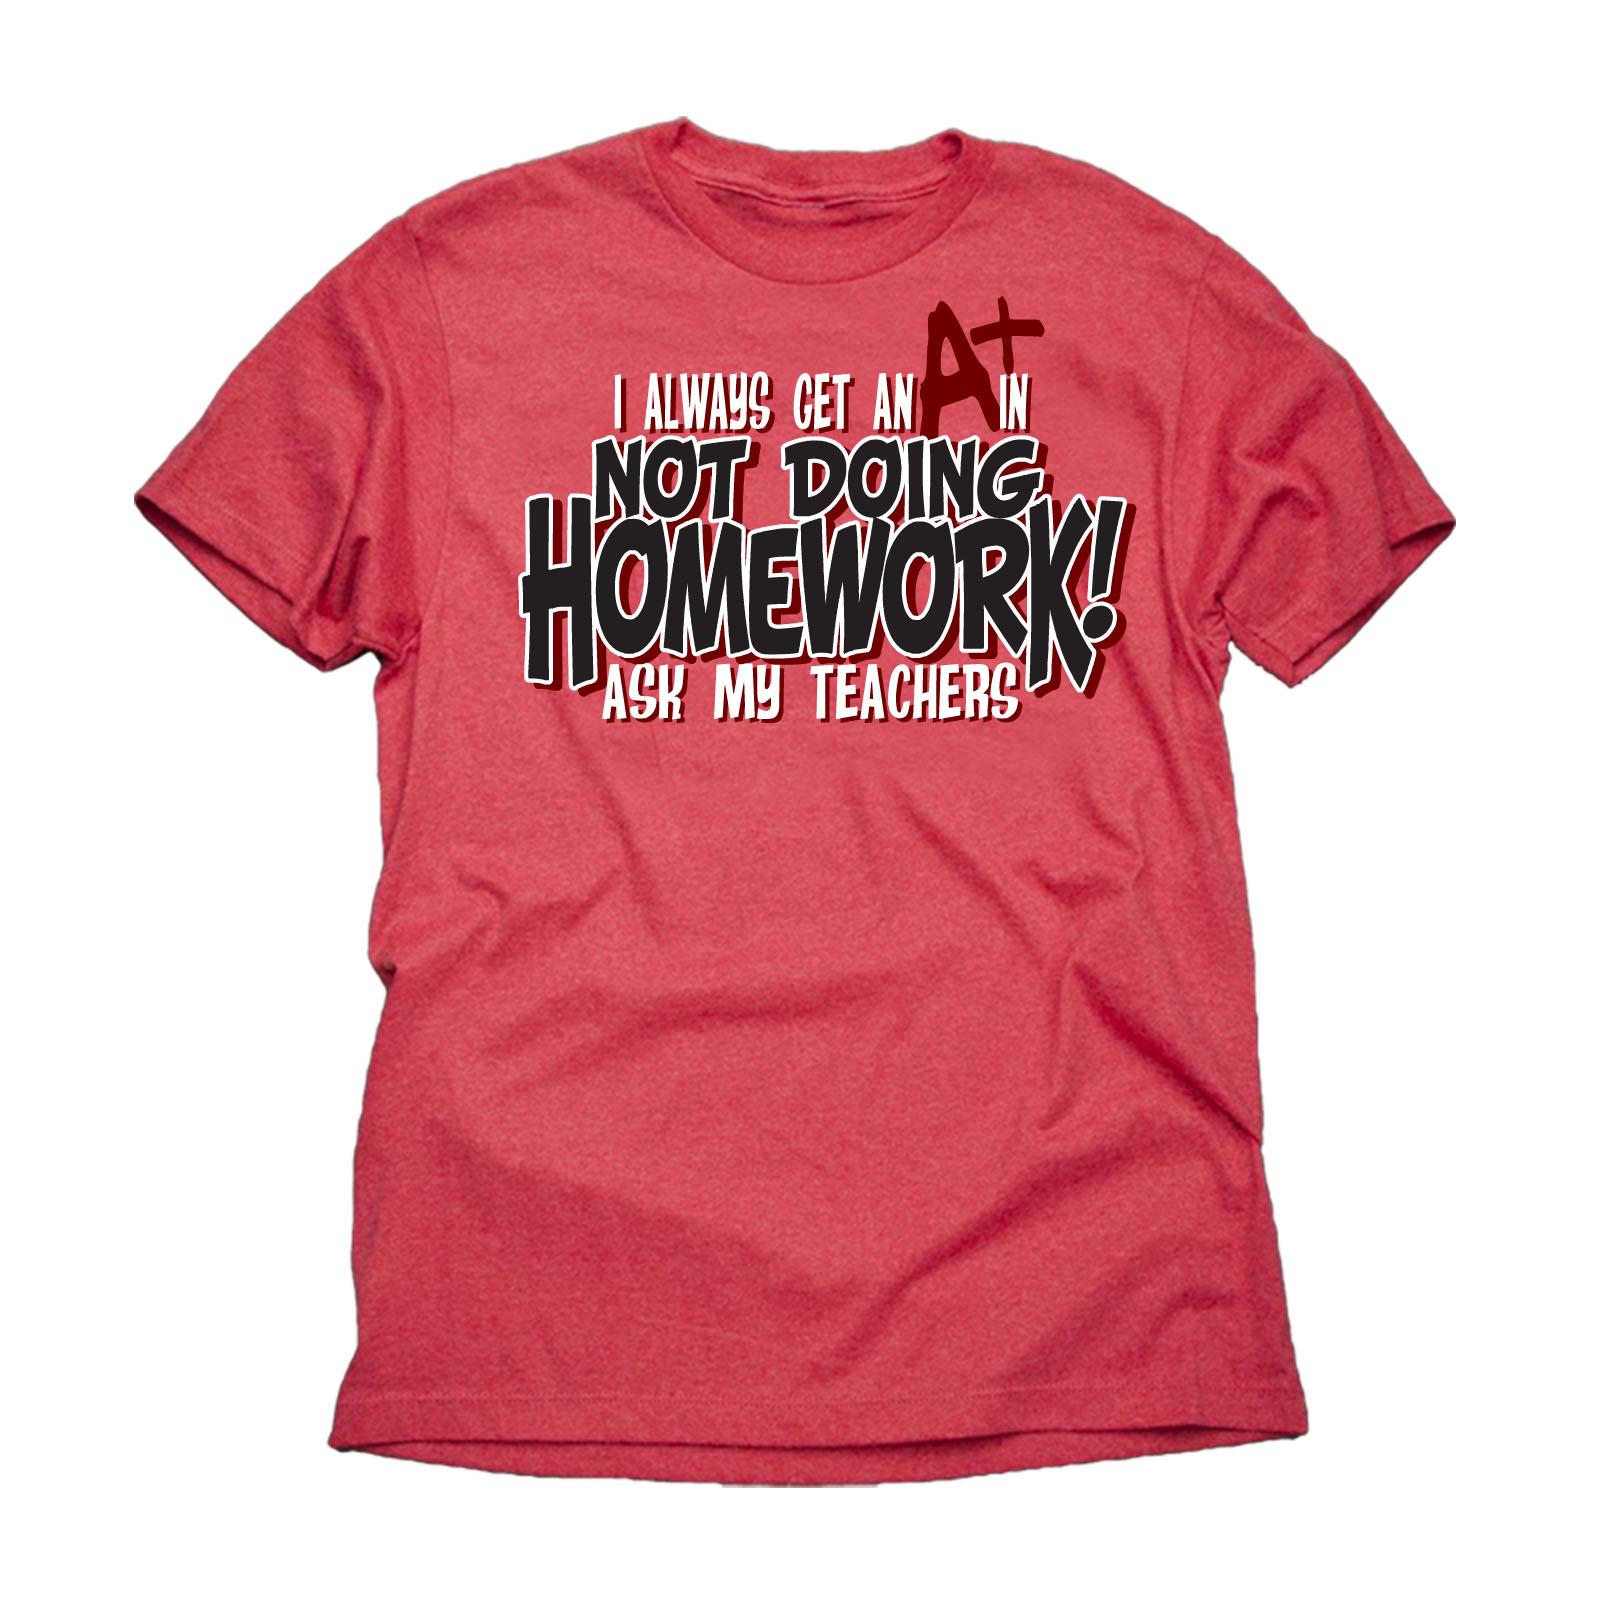 Route 66 Boy's Graphic T-Shirt - Homework Slacker